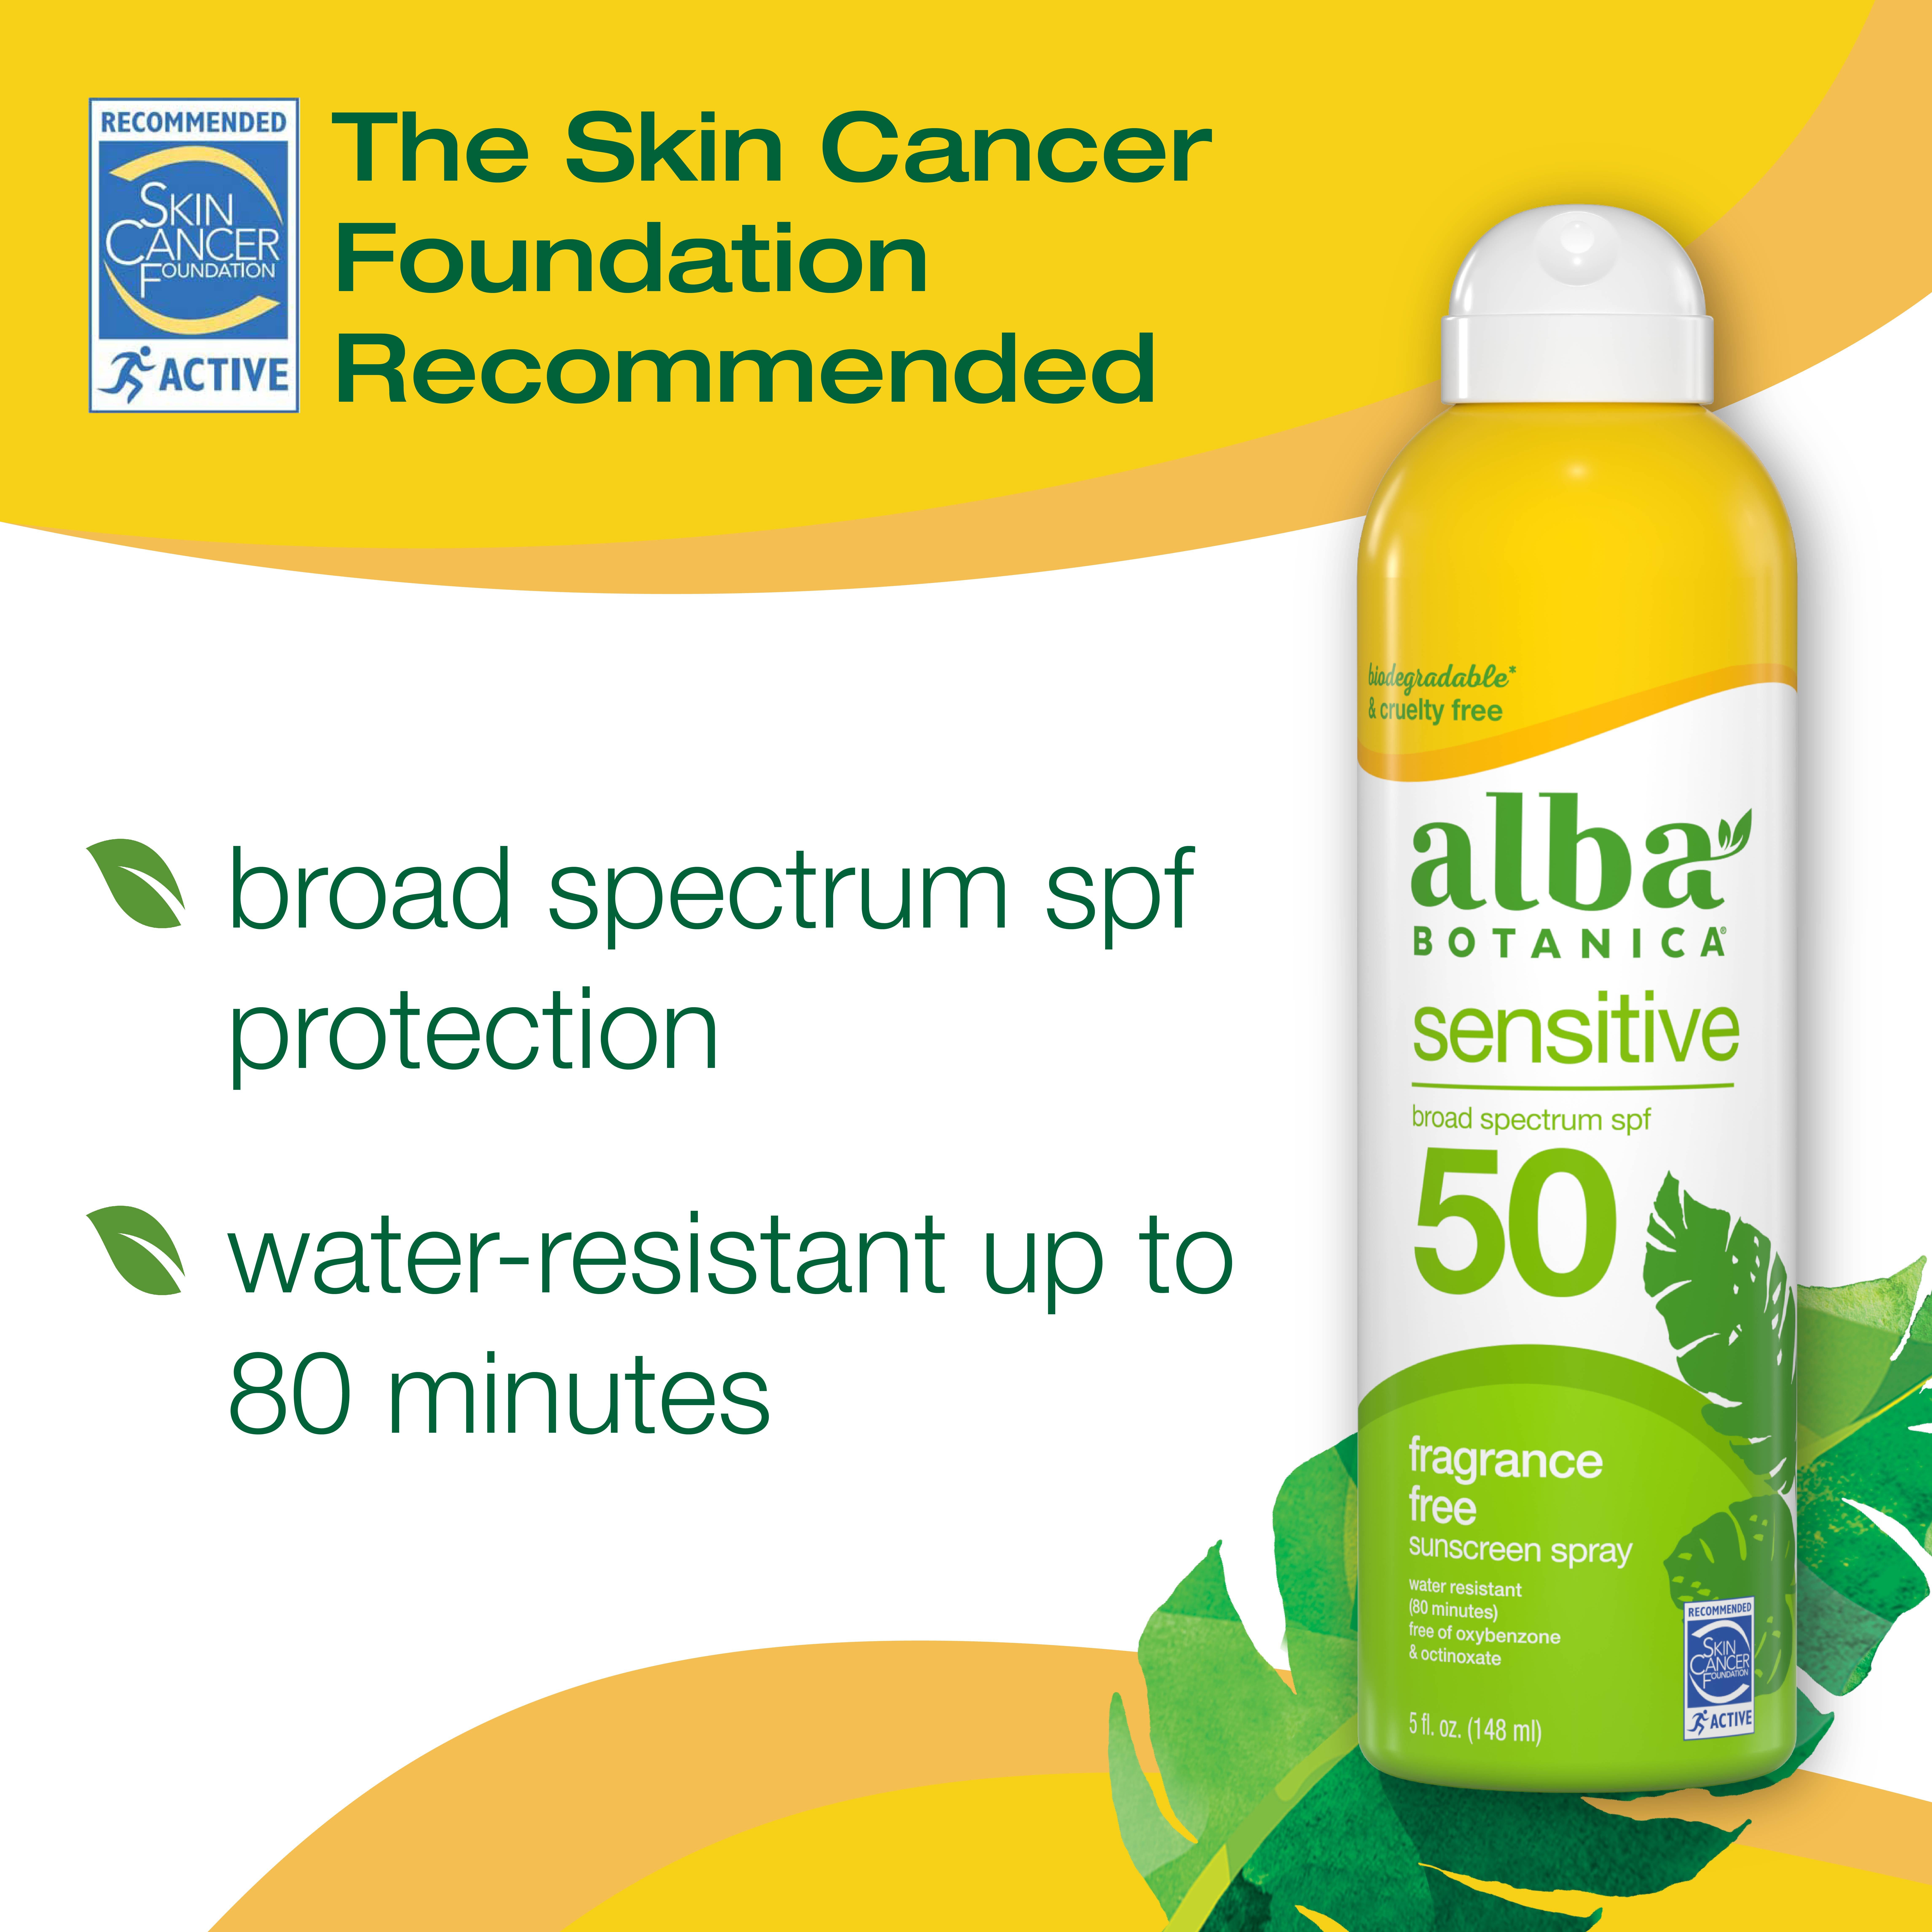 Alba Botanica Sensitive Sunscreen Spray SPF 50, Fragrance Free, 5 fl oz - image 3 of 11